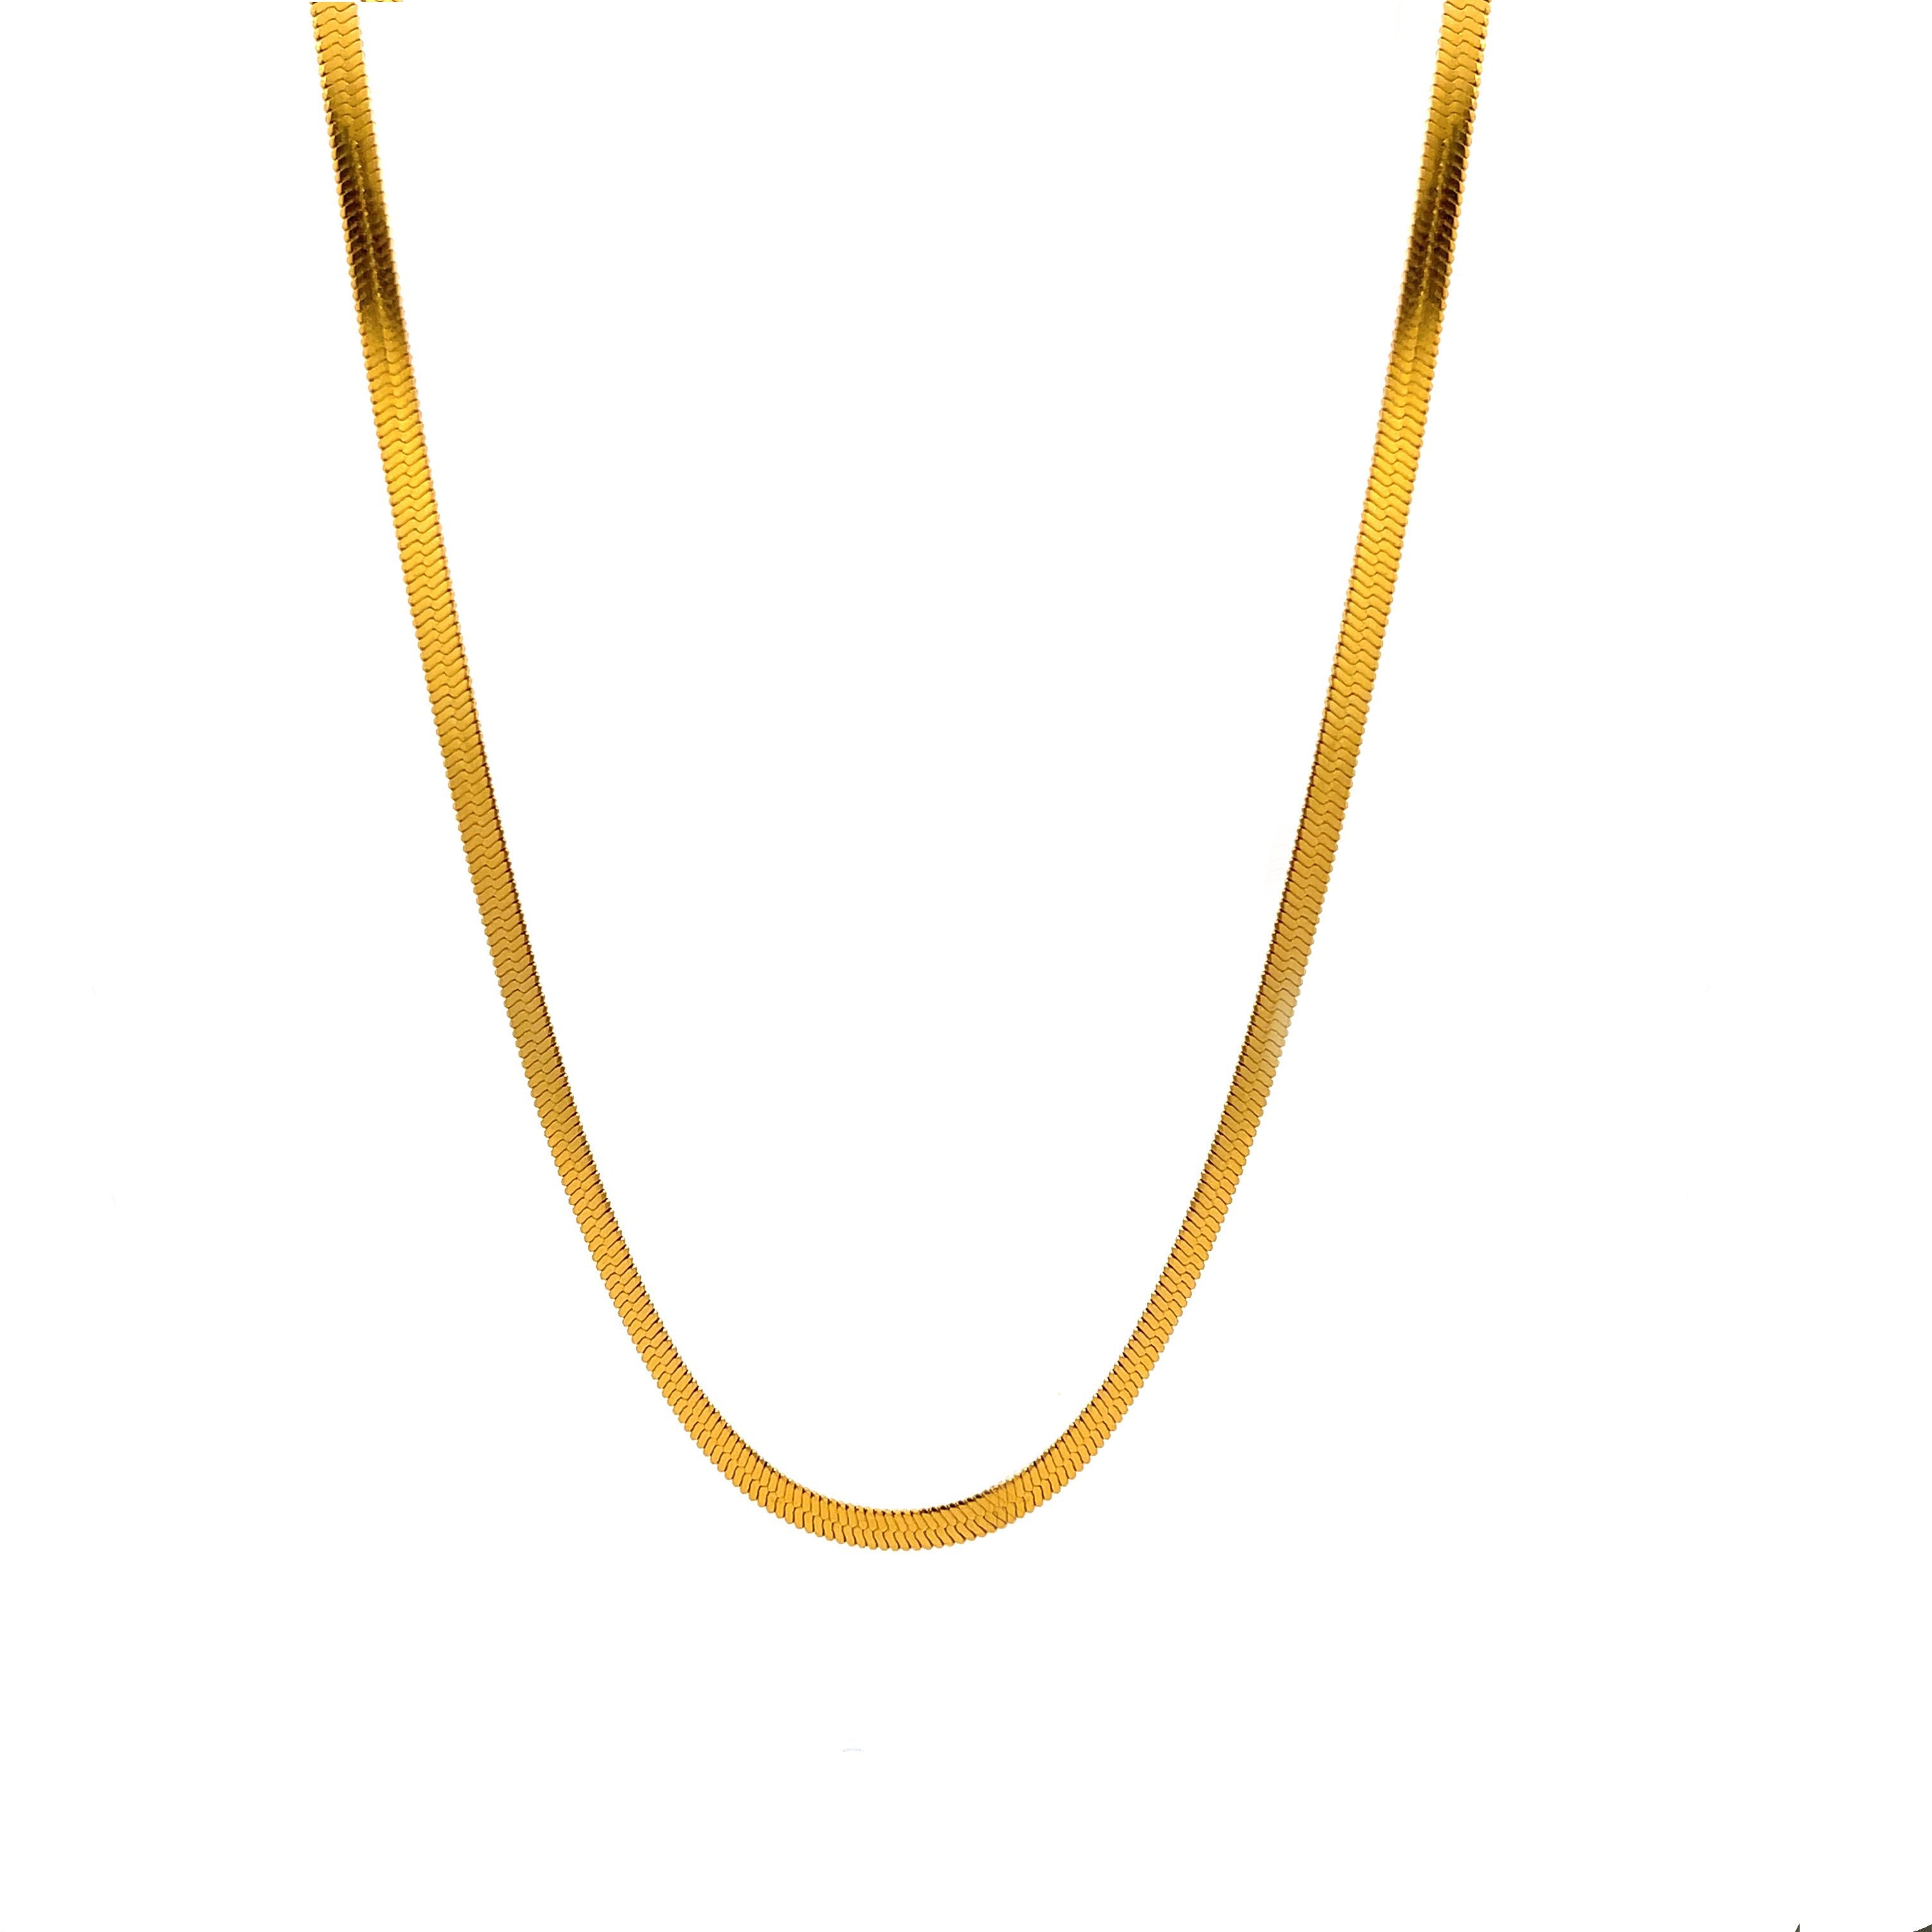 Shop Amelia Gold Flat Necklace by Gosia Orlowska